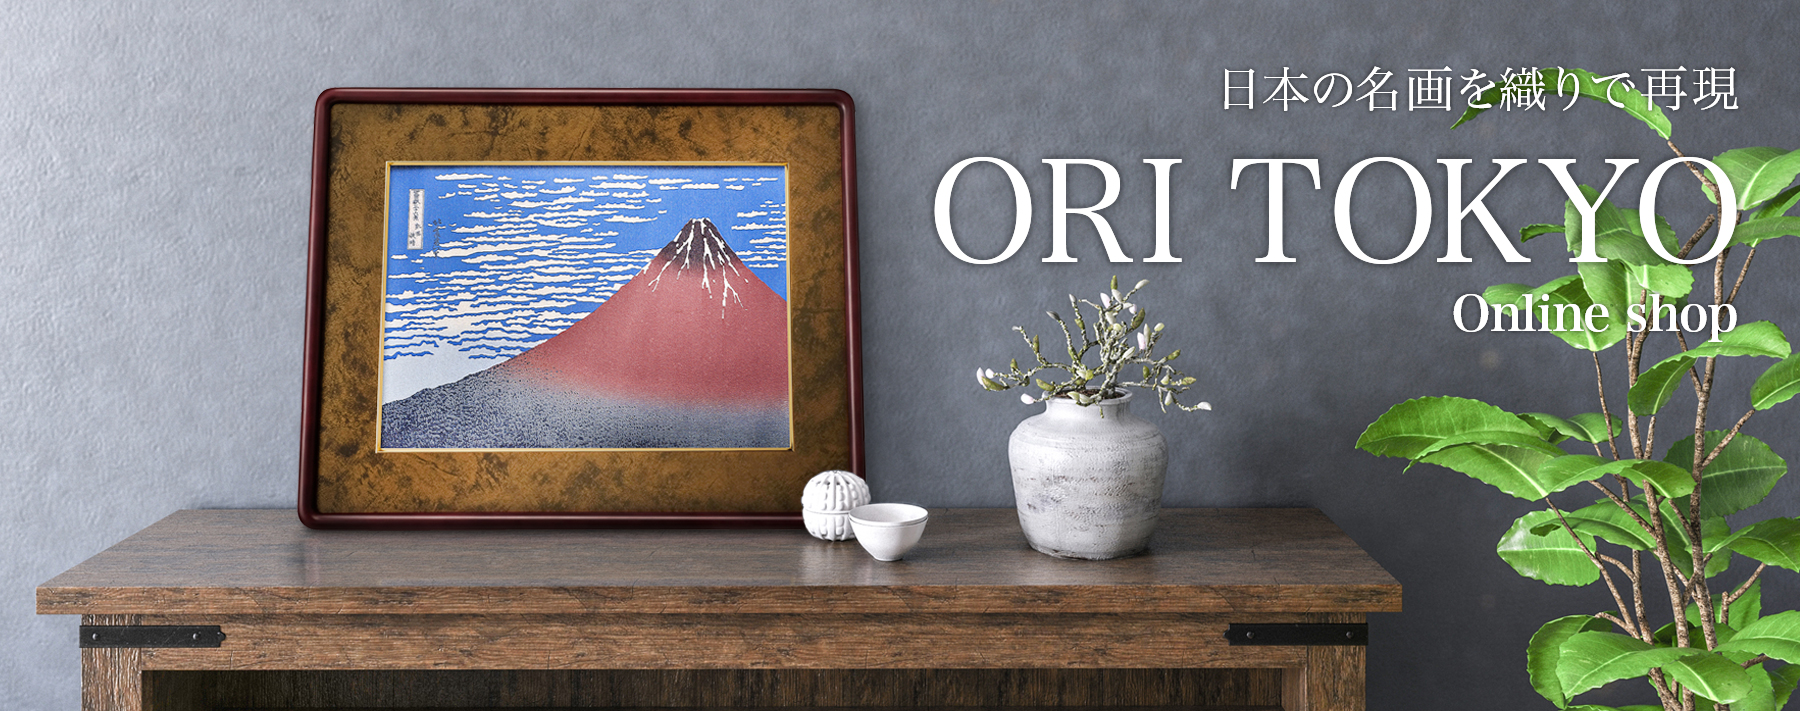 ORI TOKYO オンラインショップの「織り」製品は洋室にもマッチします